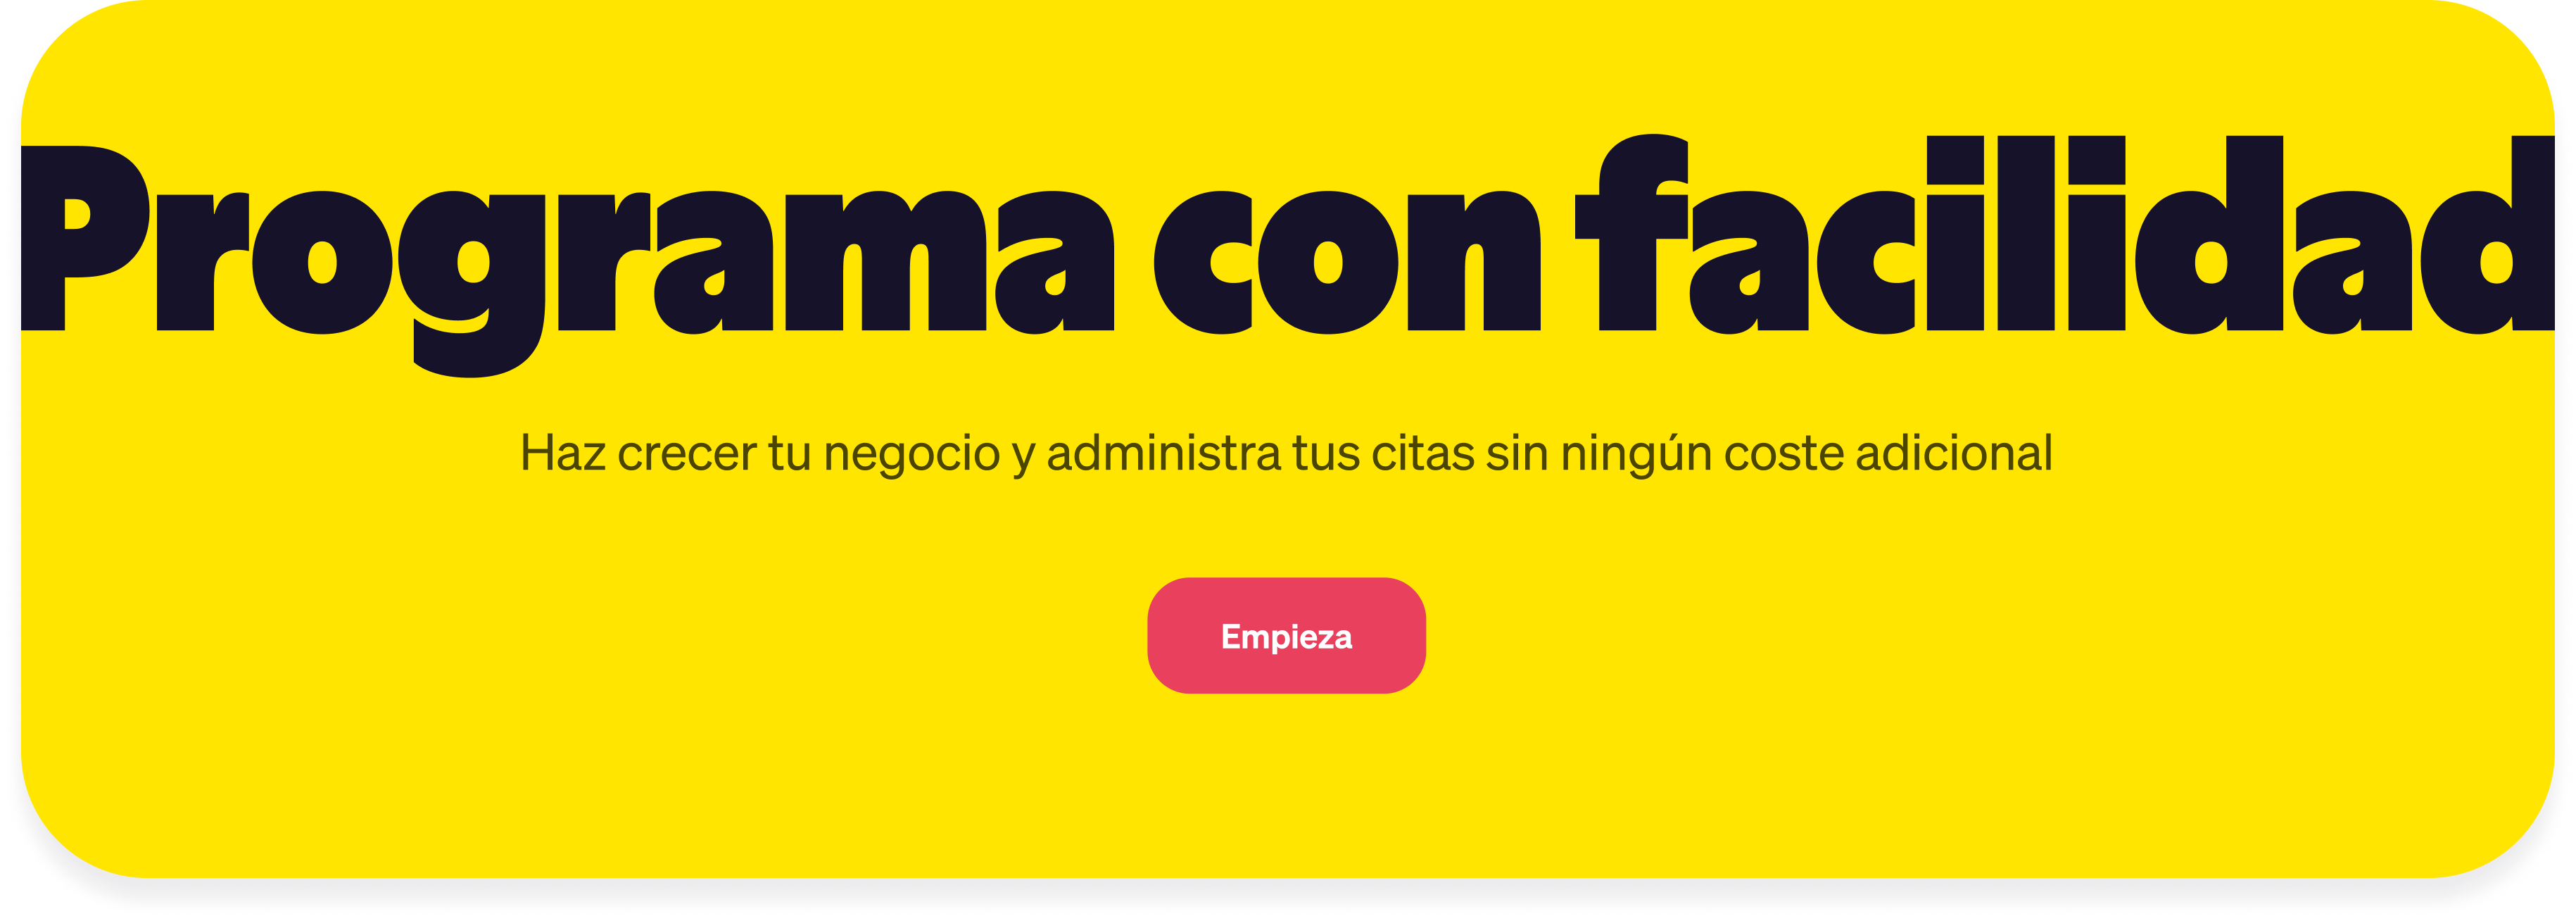 cta-desktop-spanish